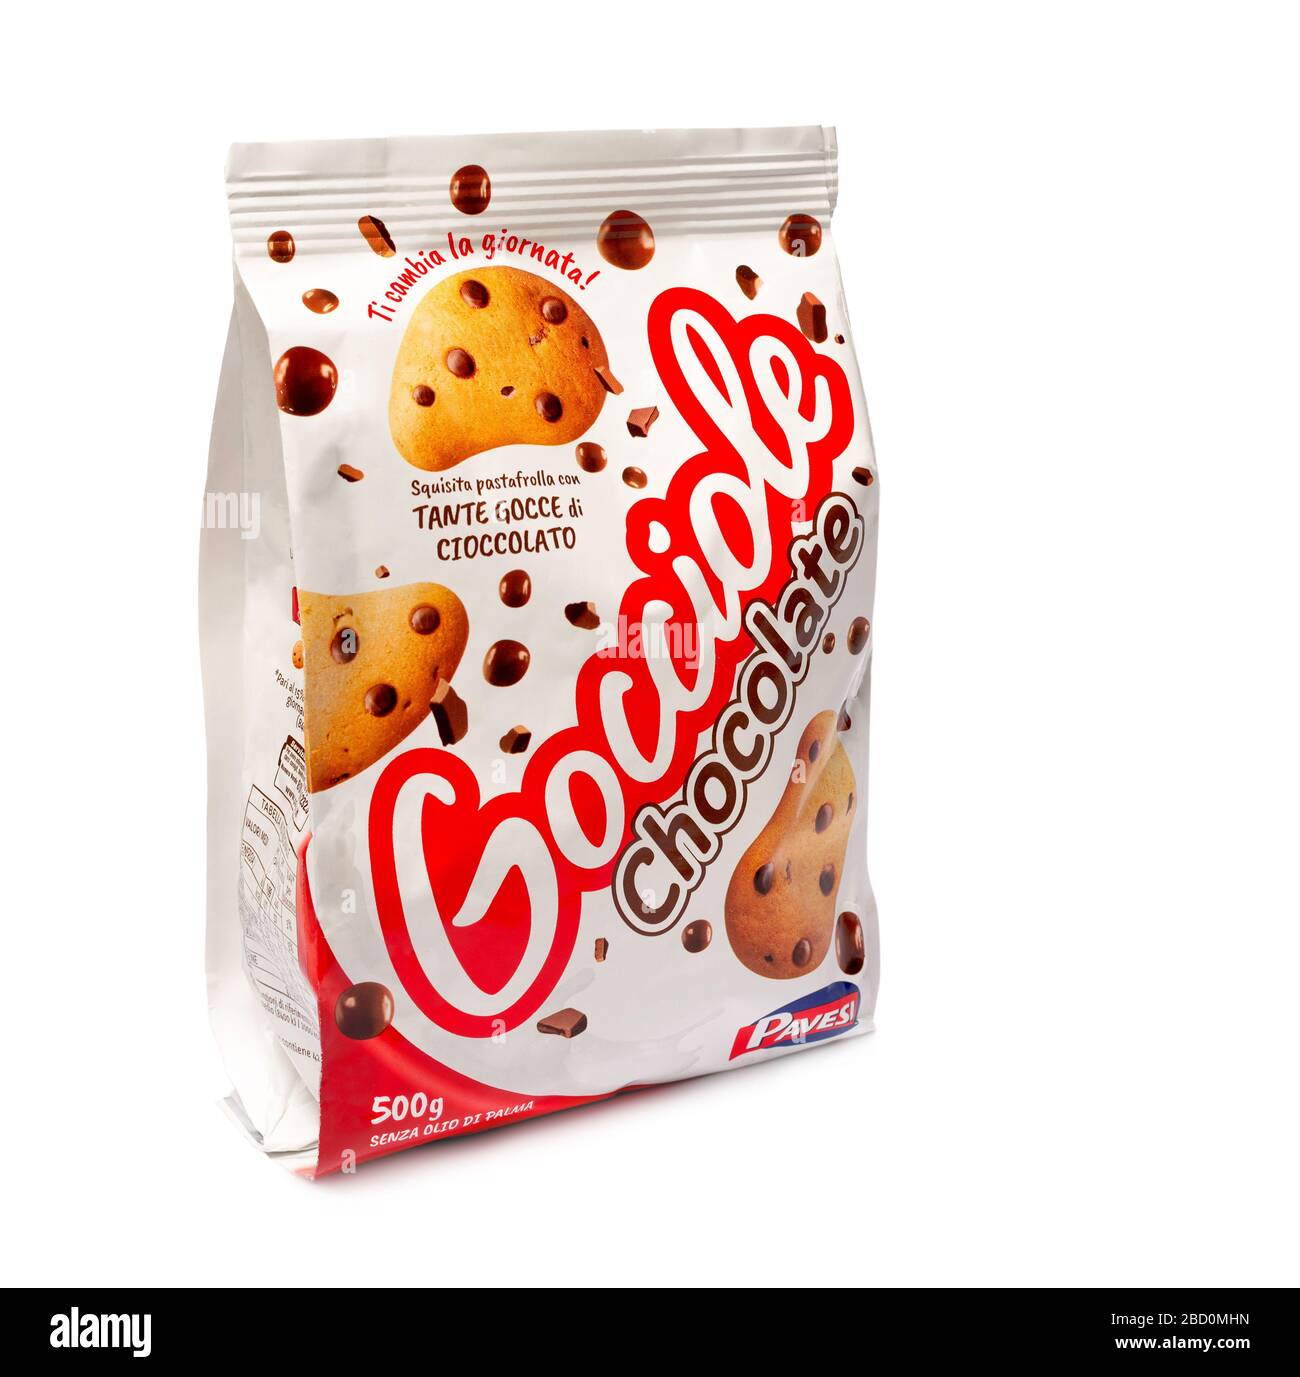 Italy, 24 marzo 2020: gocciole cookies Pavesi Brand sack Stock Photo